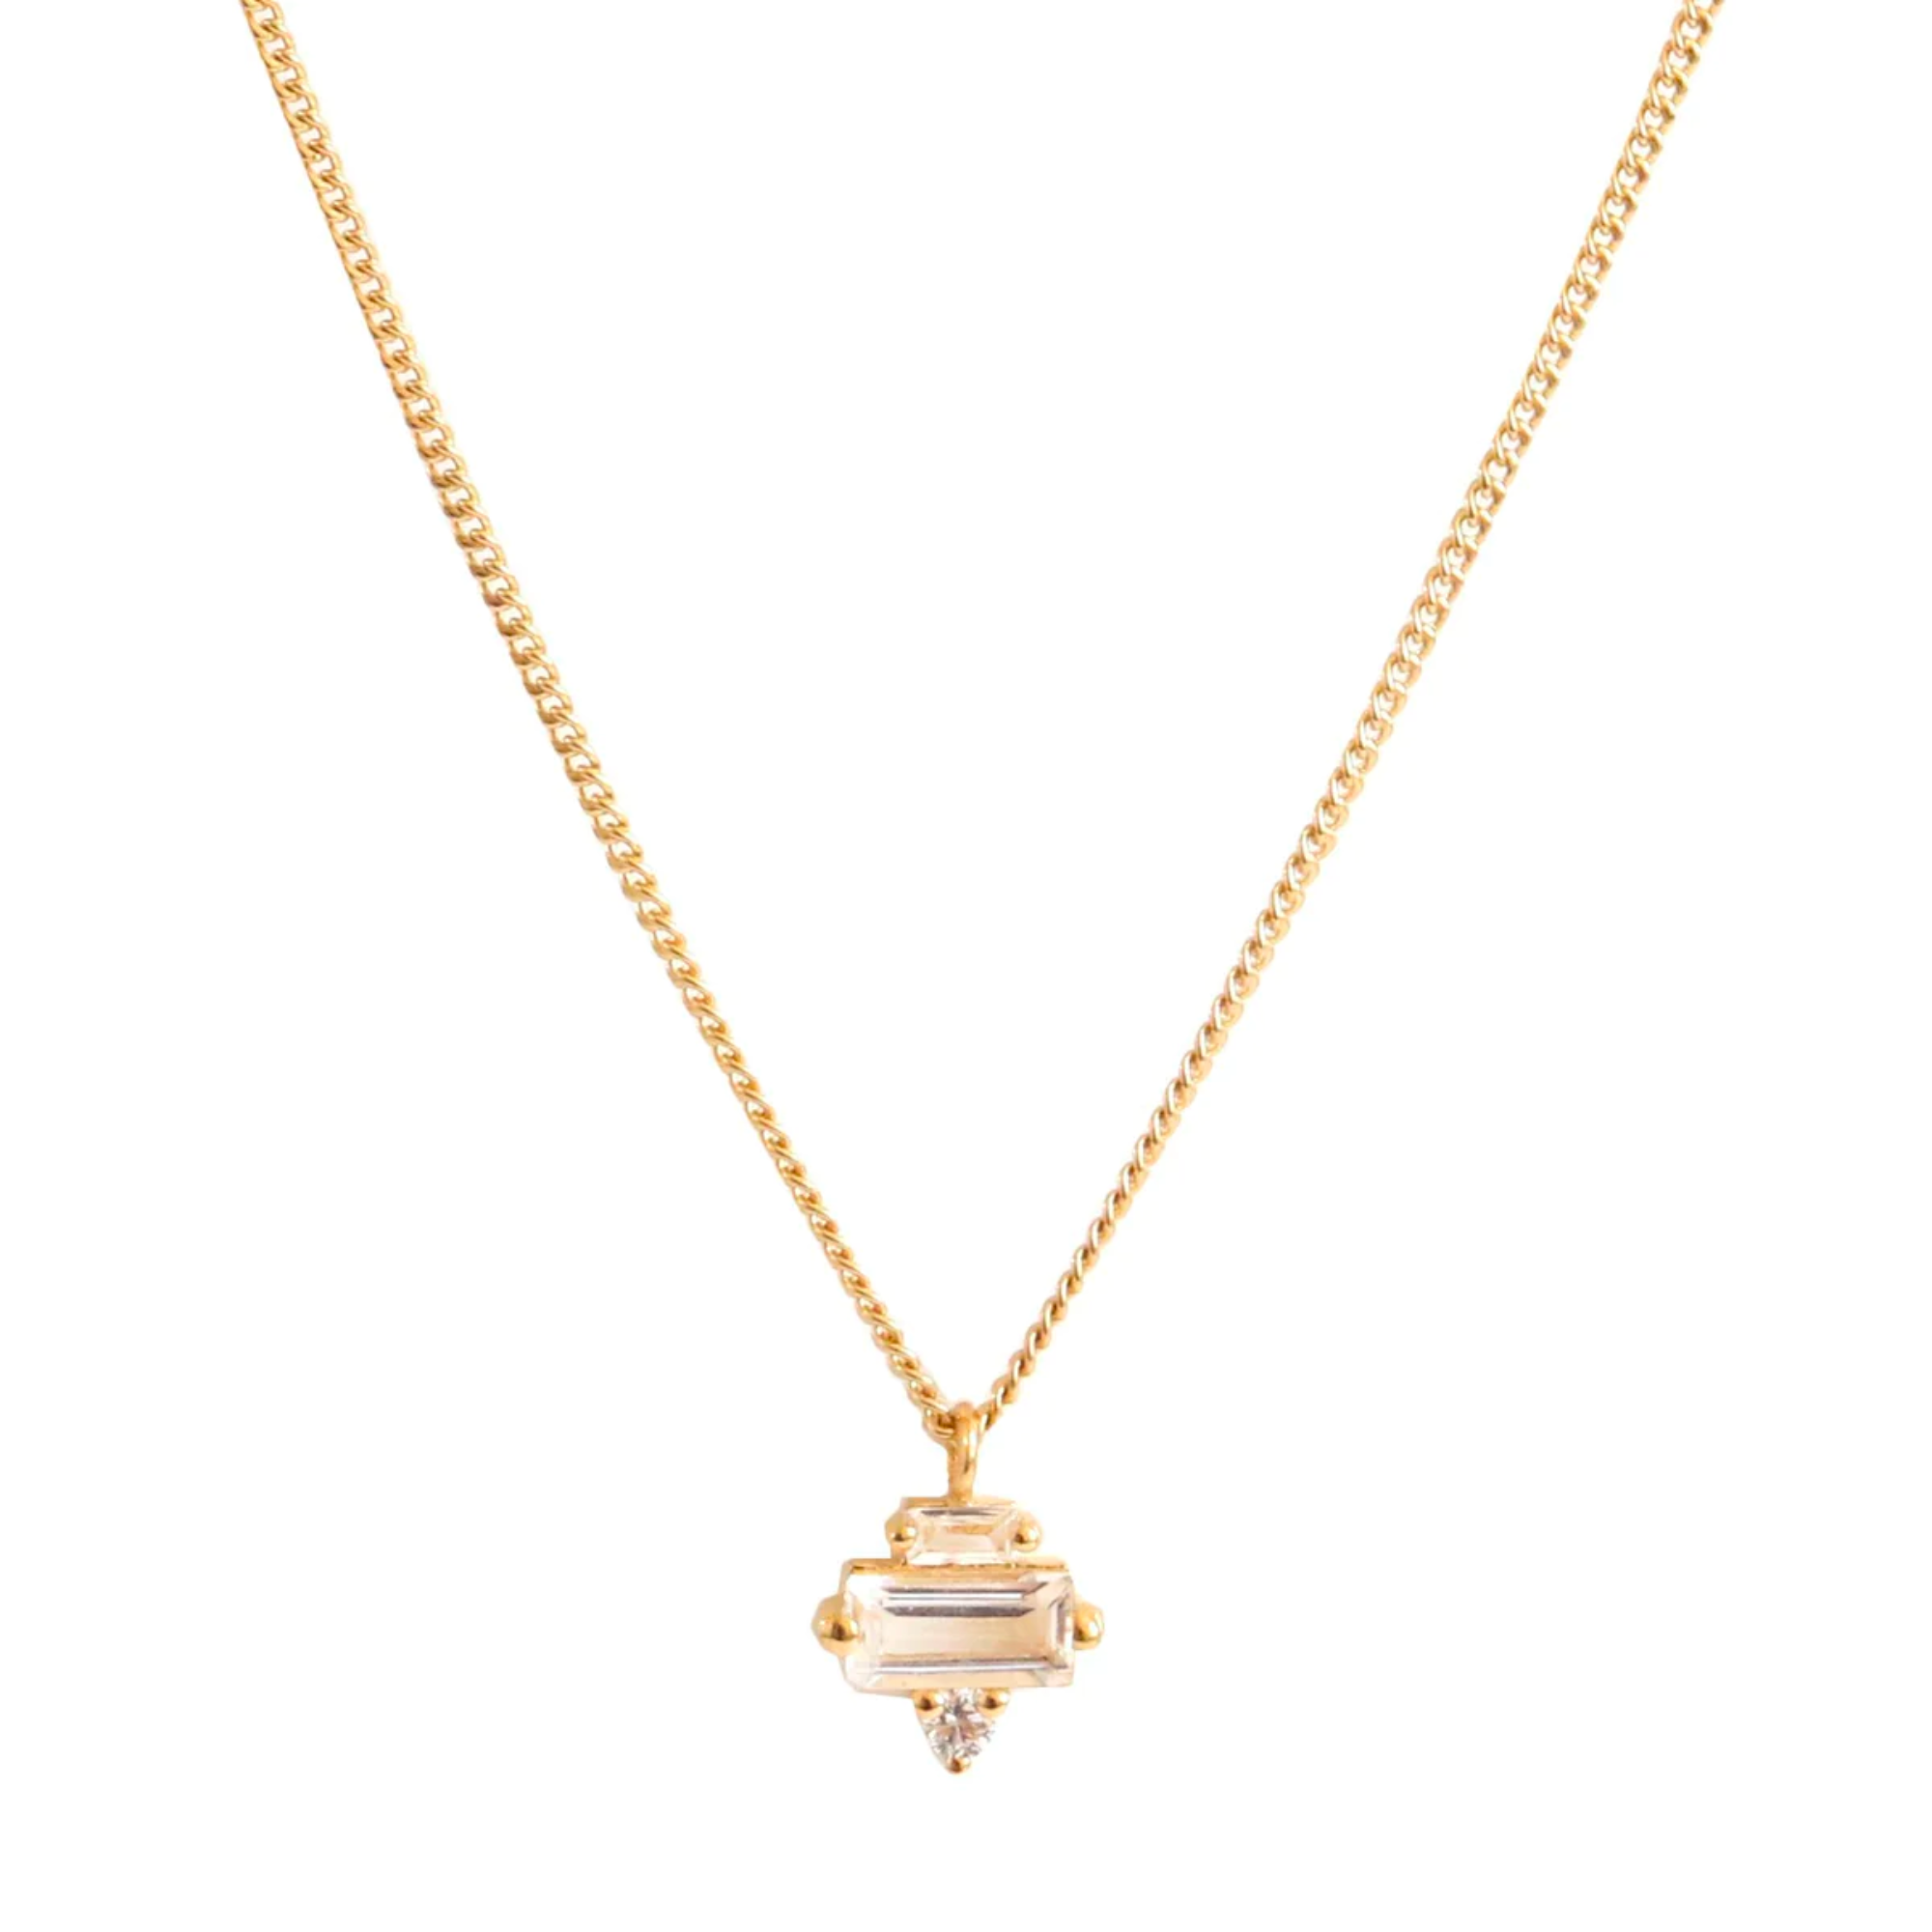 Tiny Loyal Prism Necklace - White Topaz, Cubic Zirconia + Gold